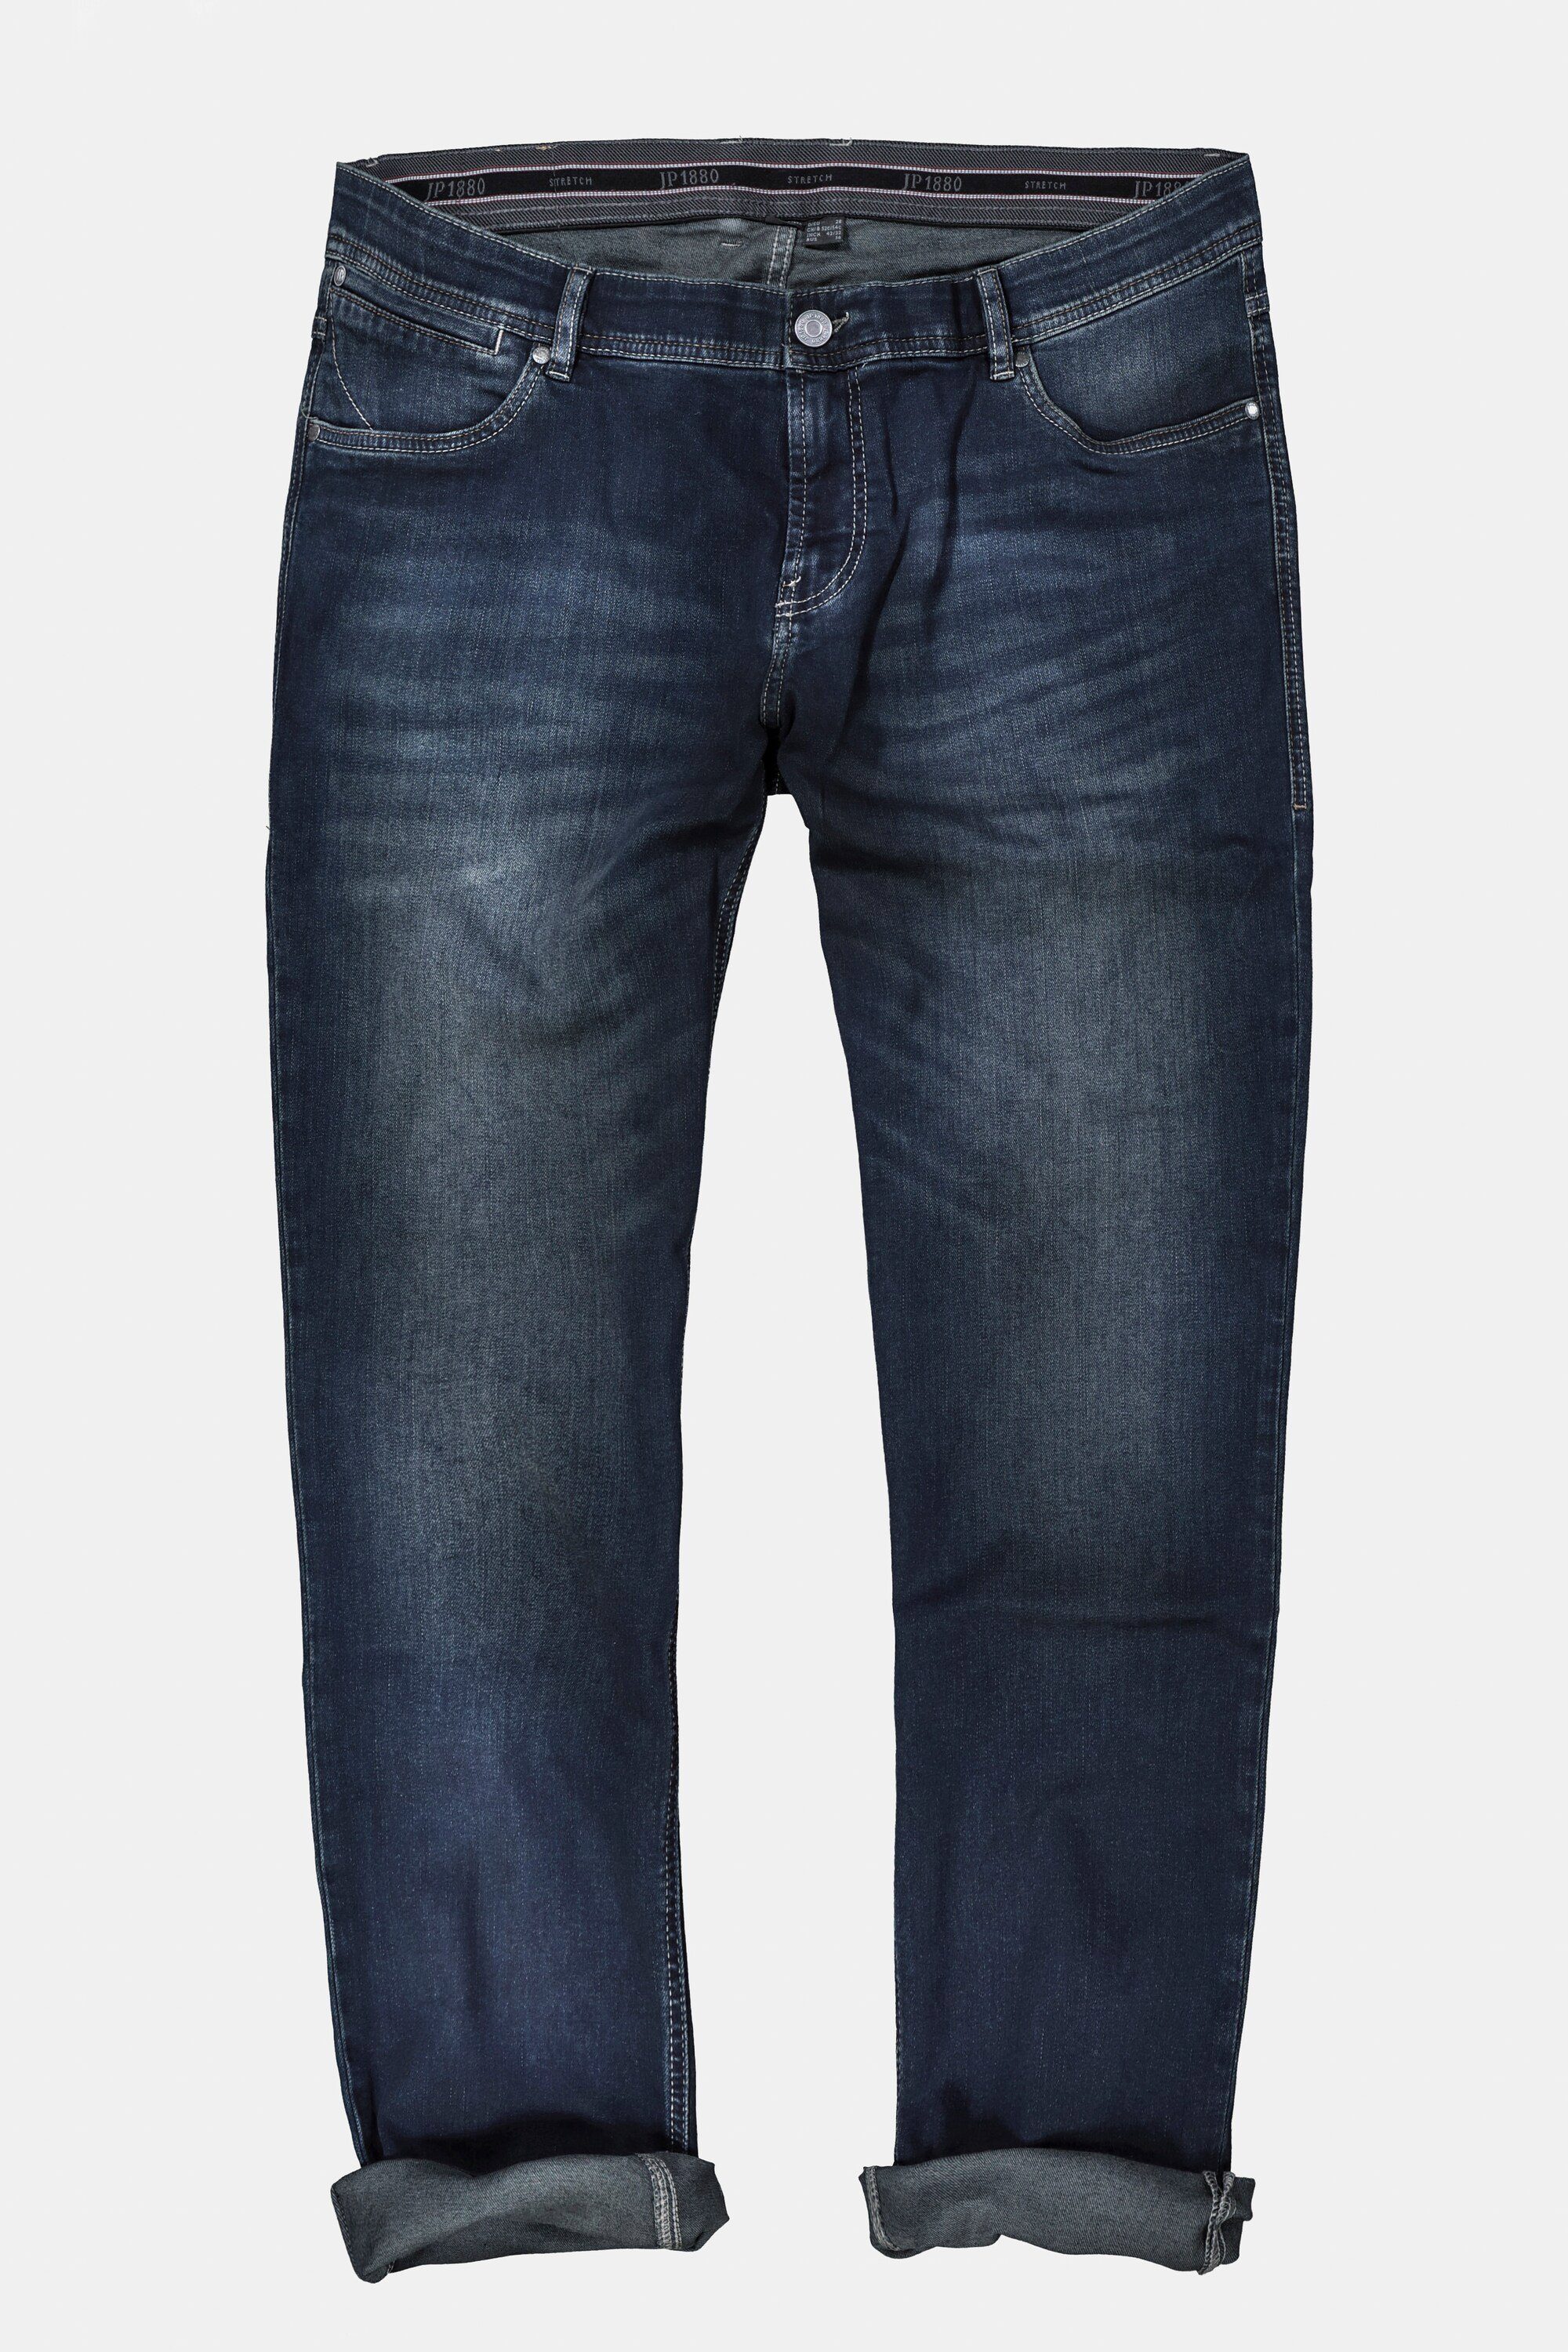 70/35 JP1880 denim bis Cargohose Denim Jeans blue Bauchfit Gr.